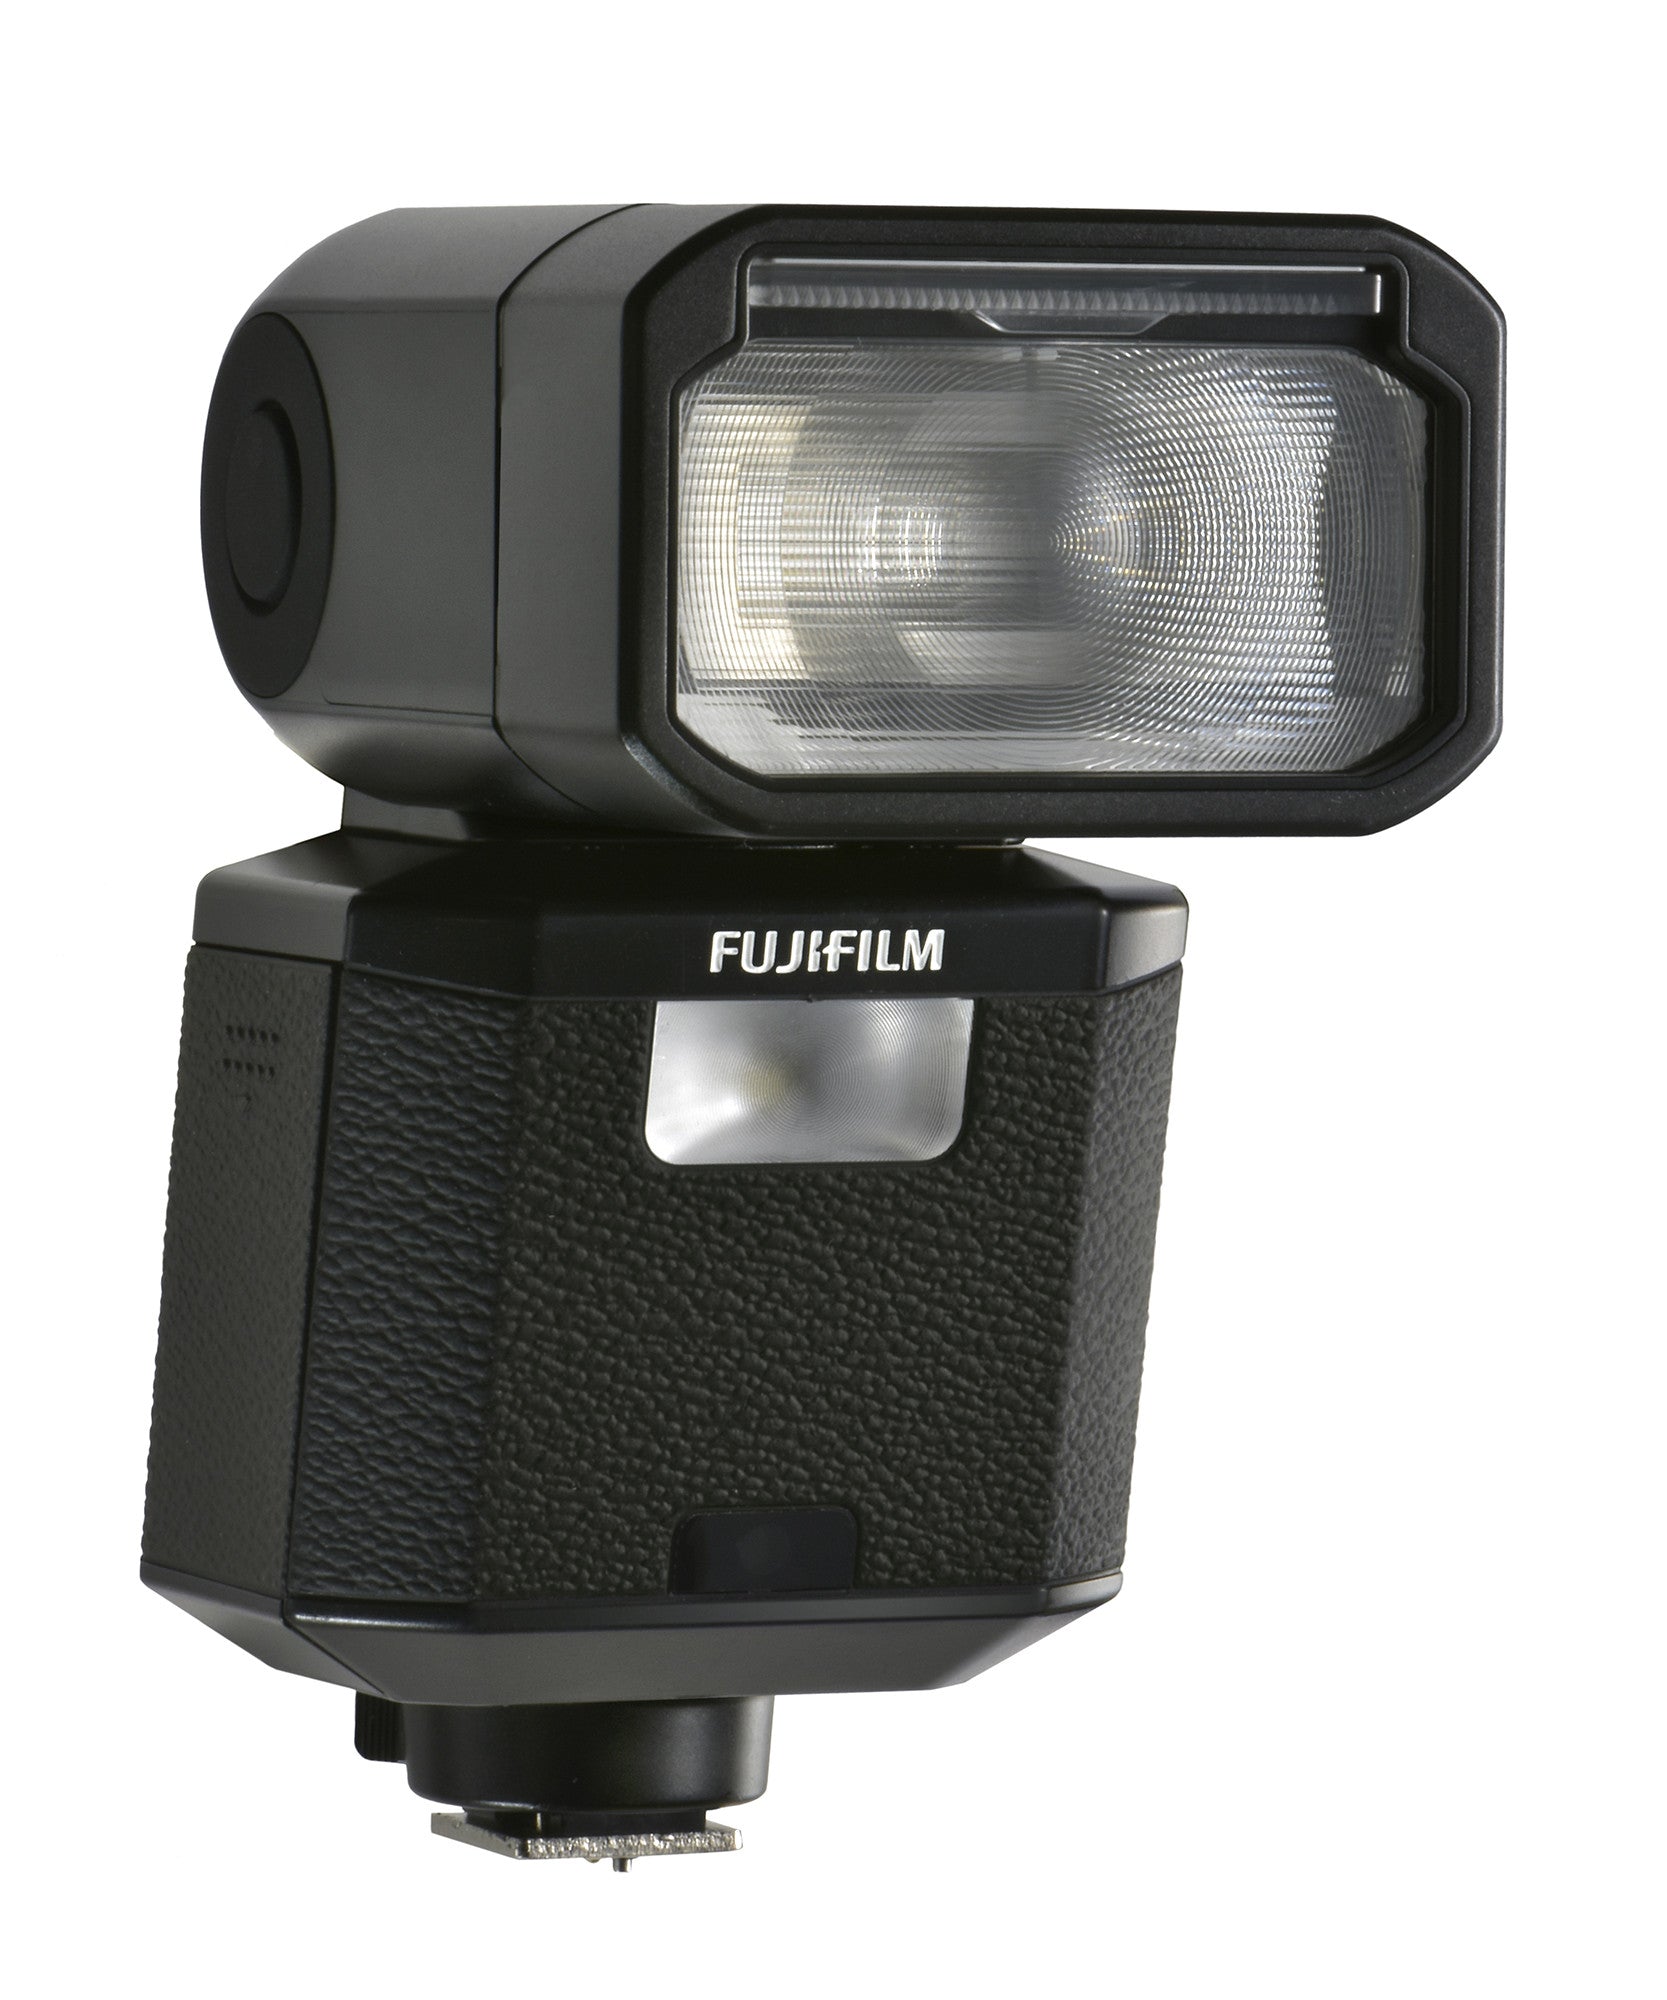 Fujifilm EF-X500 Flash, lighting hot shoe flashes, Fujifilm - Pictureline  - 1